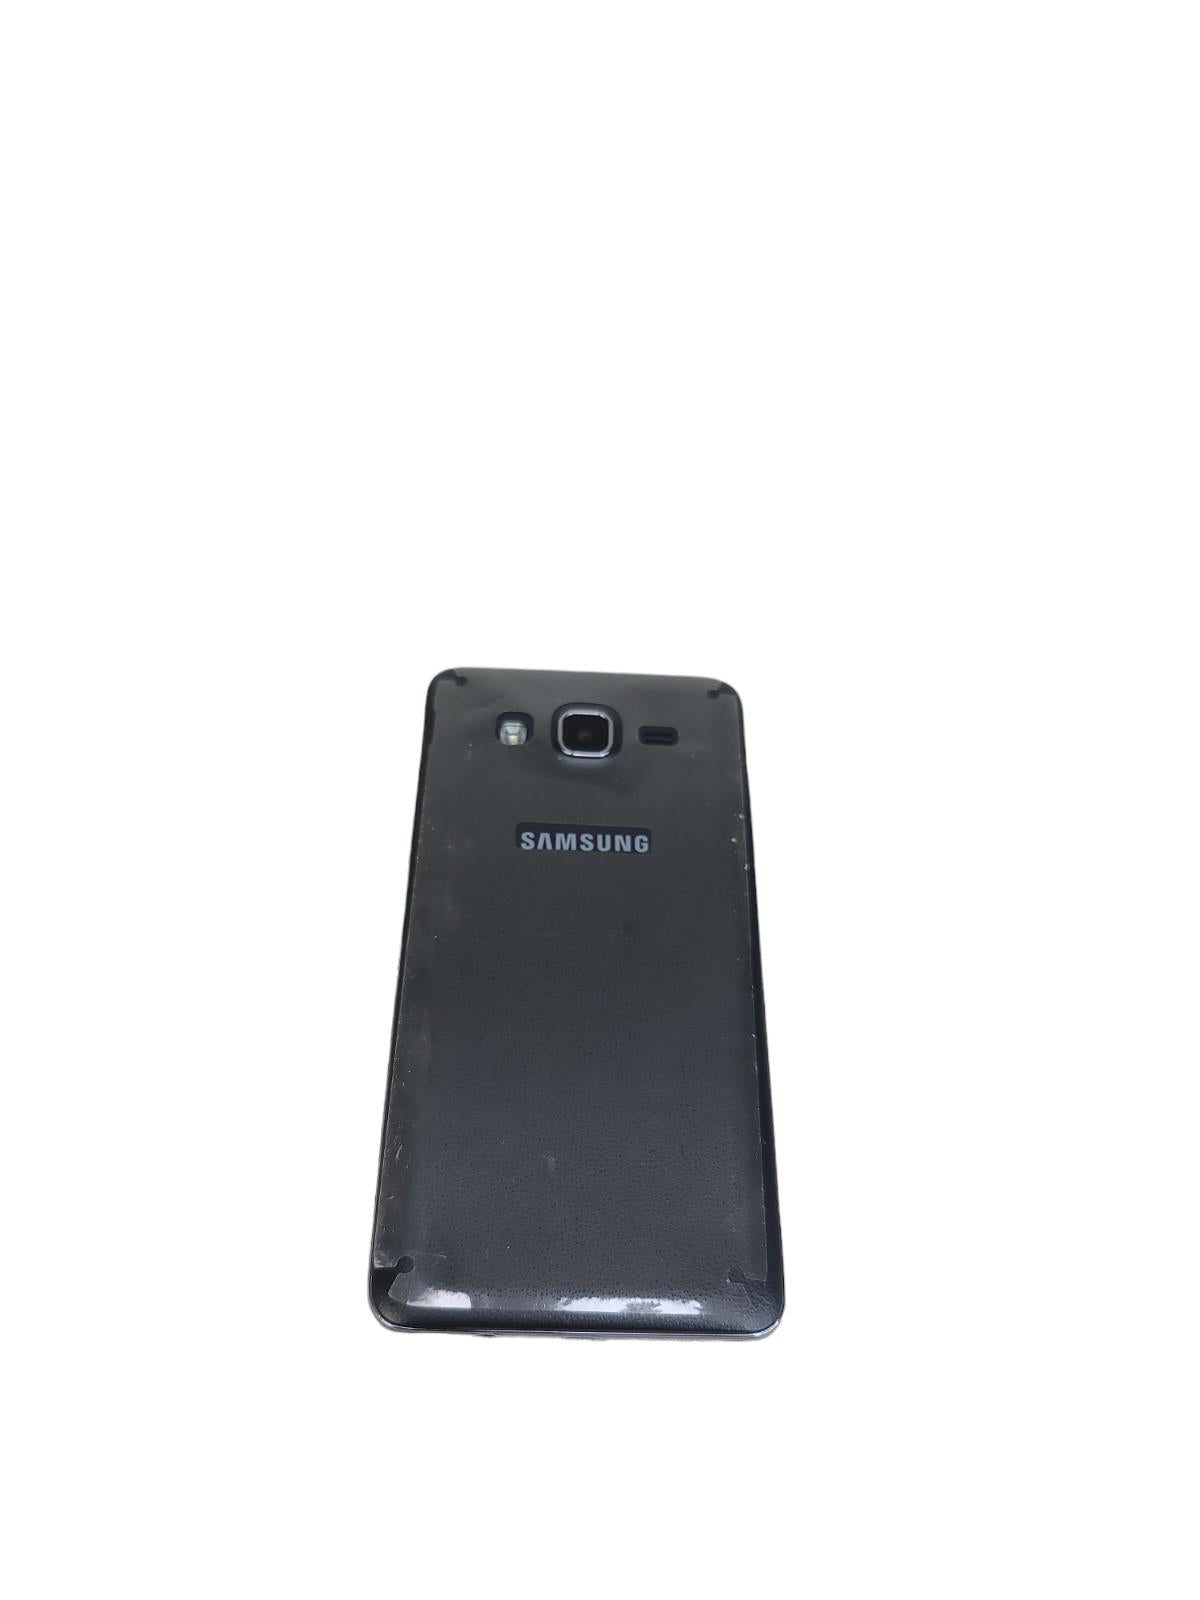 Samsung Galaxy On5 Android Smartphone (MetroPCS)